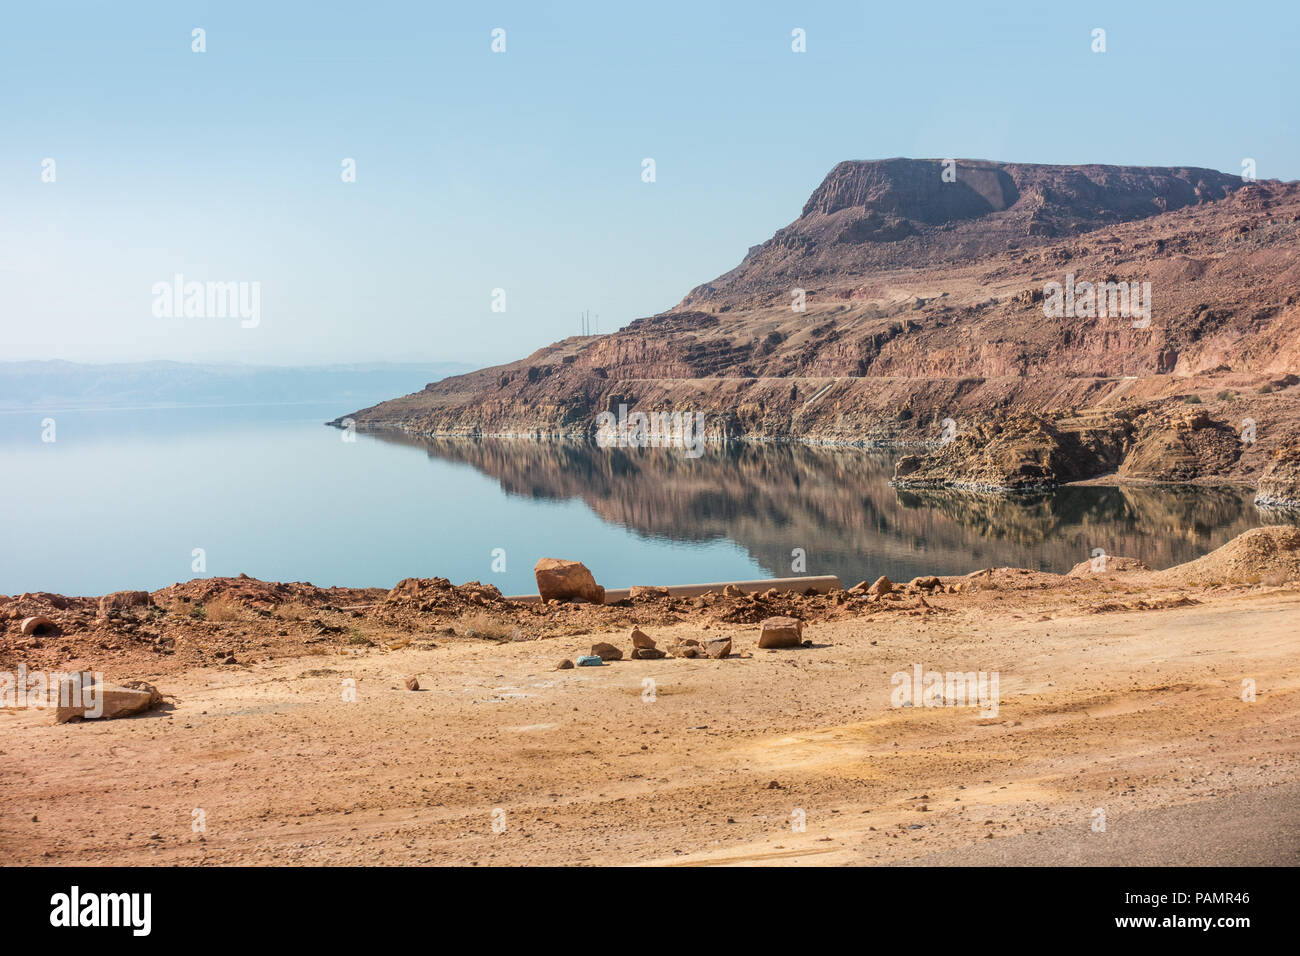 where sandy mountains meet the very reflective Dead Sea, on the Jordanian side Stock Photo